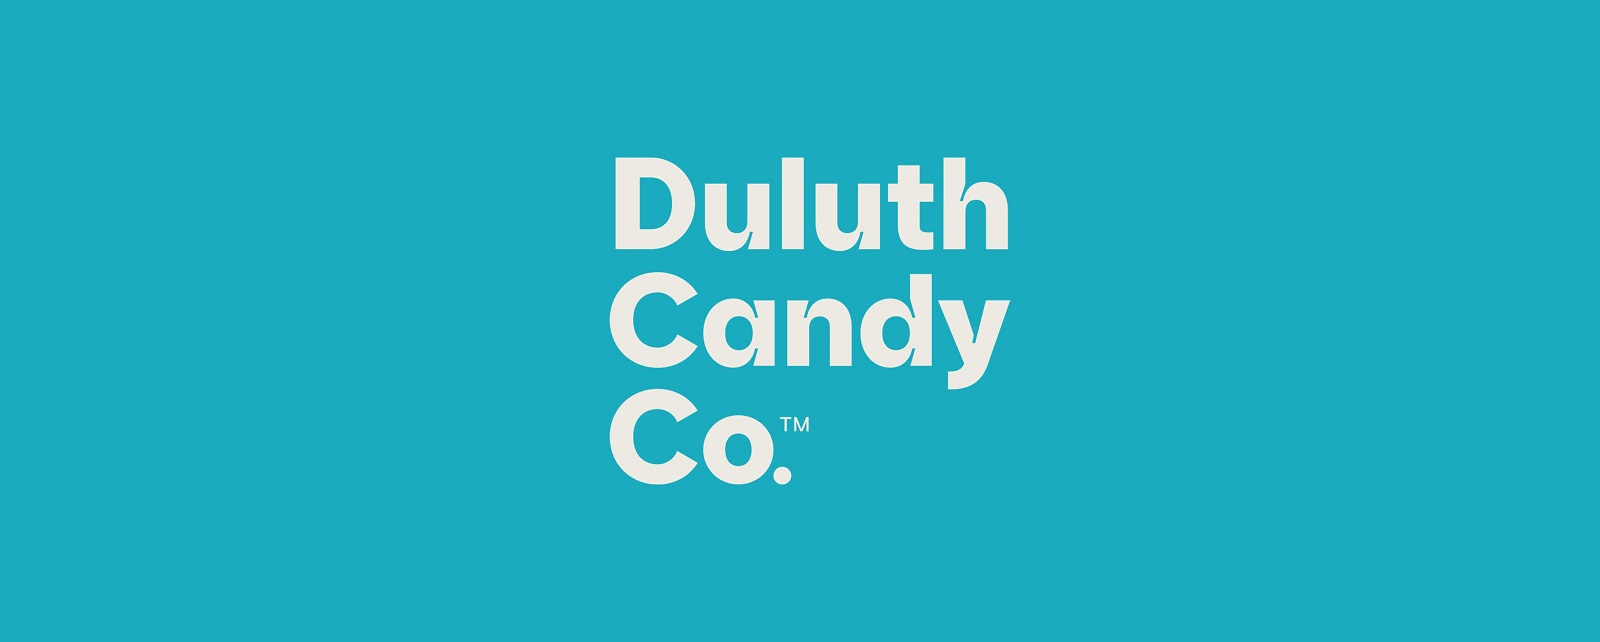 Нейминг, Логотип, Дизайн этикетки, Дизайн упаковки, Брендинг, Studio MPLS, Duluth Candy Co.